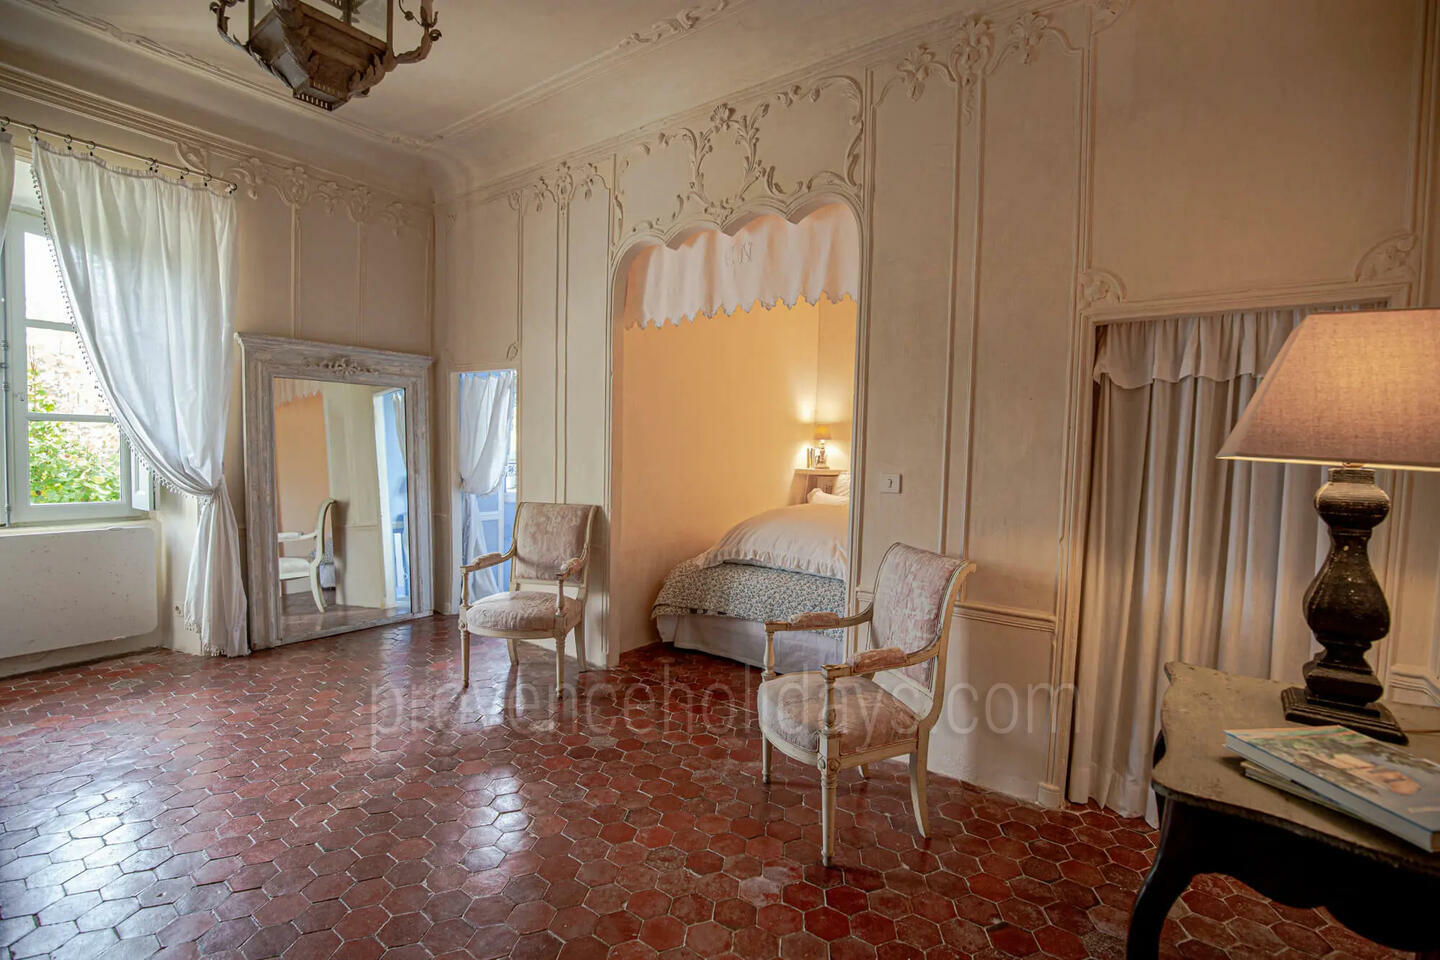 81 - Château de Gignac: Villa: Interior